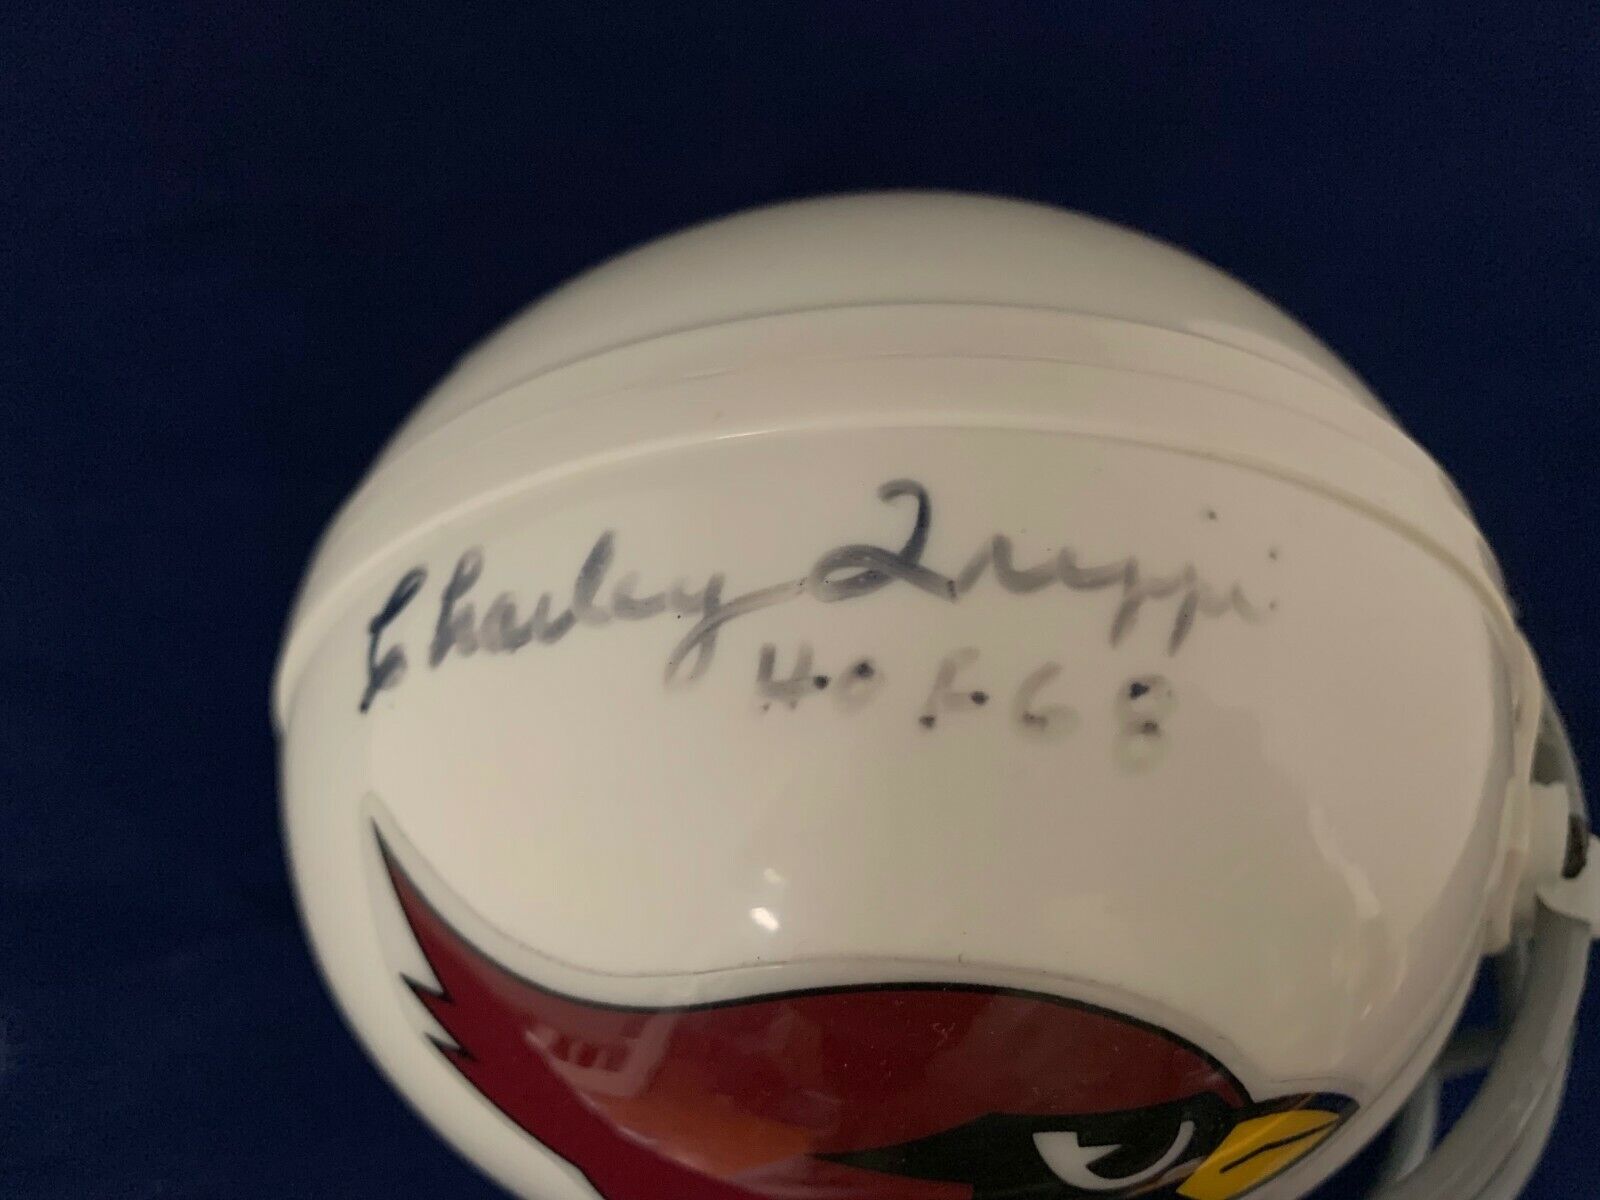 Charley Trippi Cardinals HOF 68 Signed Autographed Mini Helmet Light Auto/Cert.